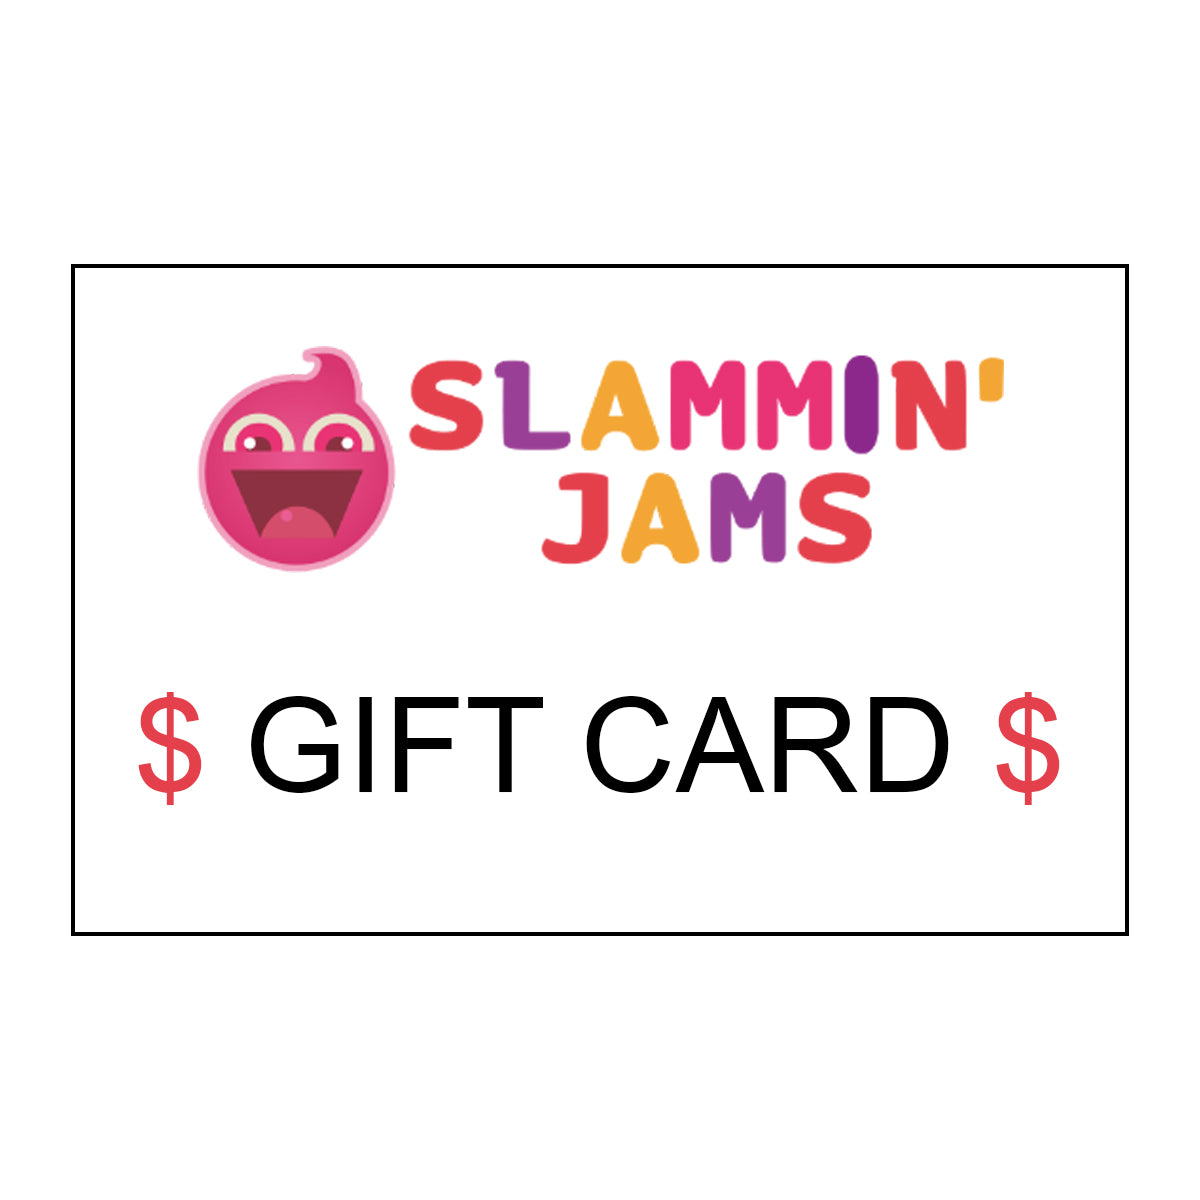 Slammin' Jams Gift Card